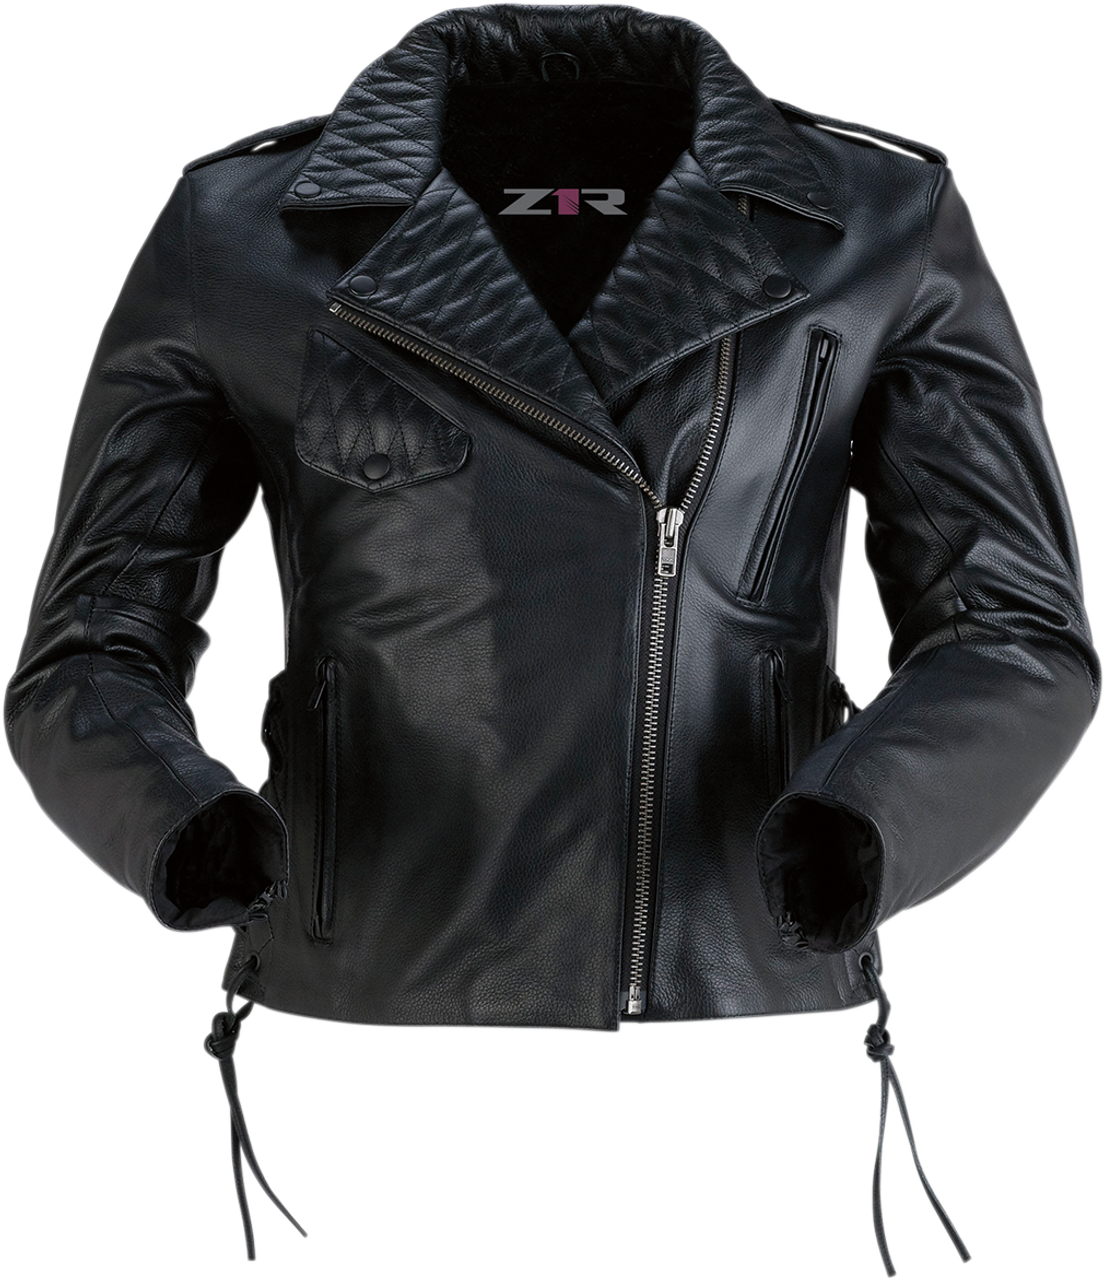 Z1R Women'S Forge Jacket Black Medium 2813-0779 - J J Motorsports